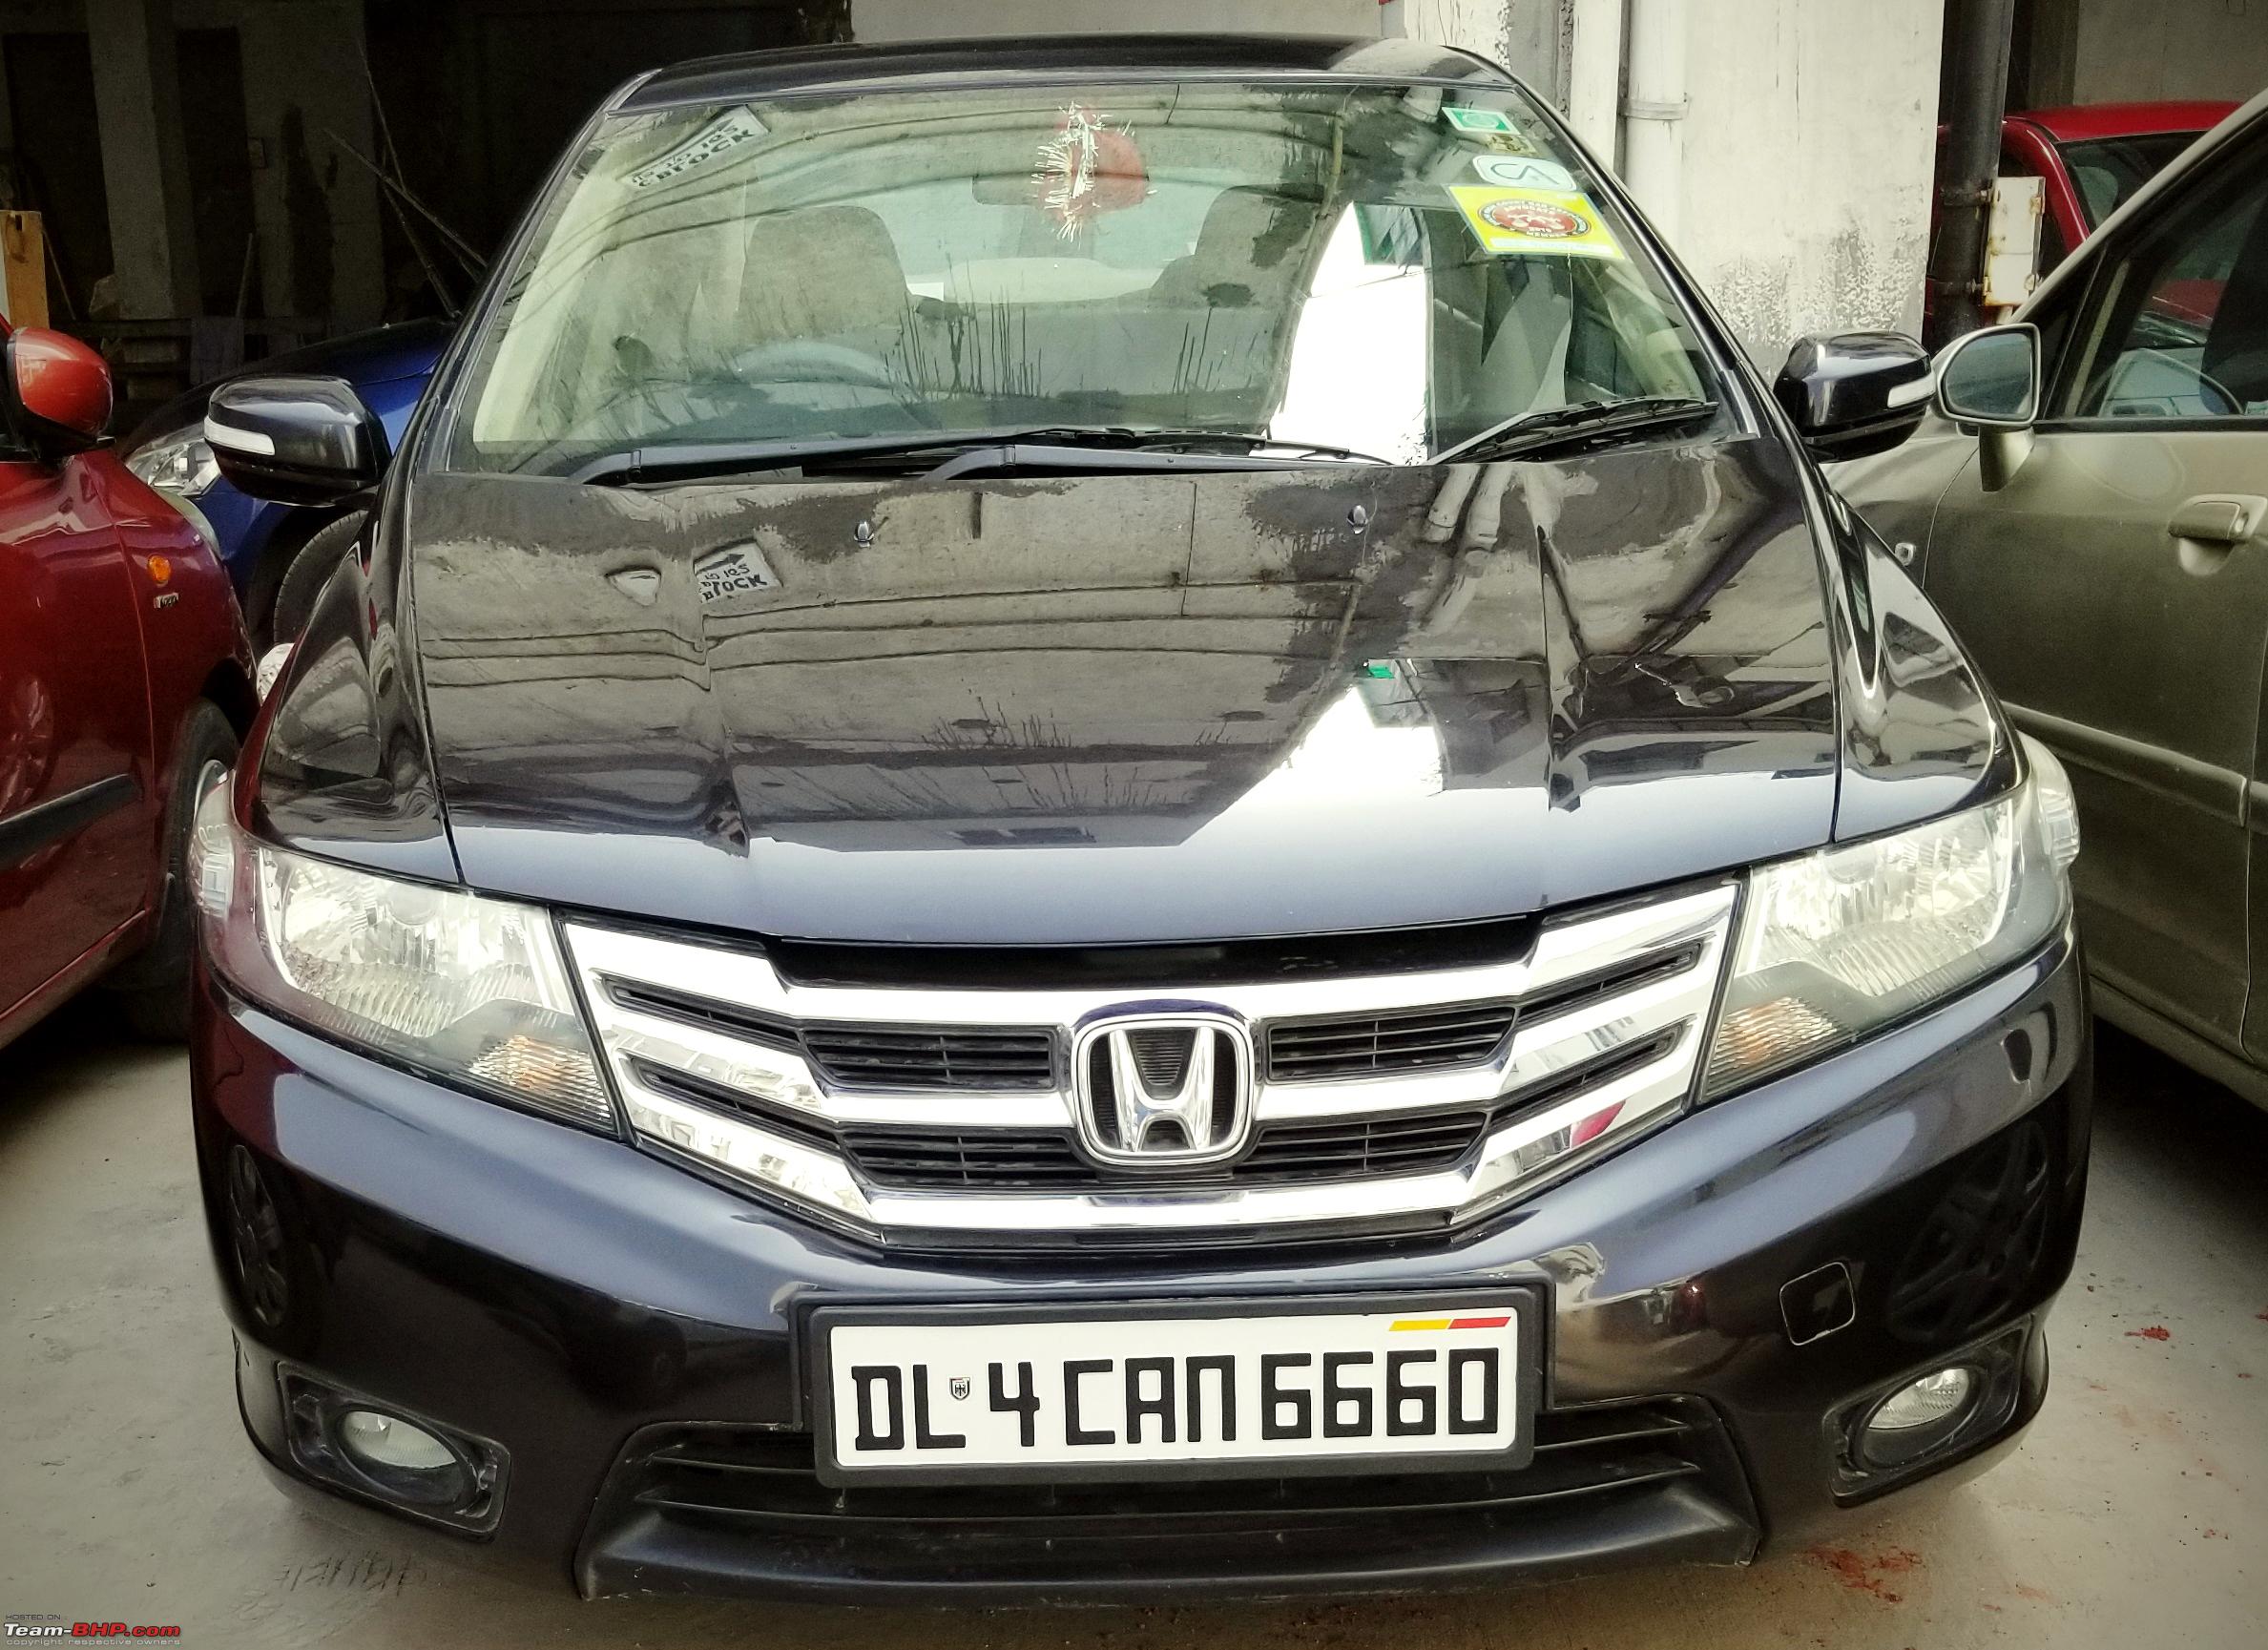 Honda Jazz last recorded price in Gurgaon - ₹ 8.01 Lakh - autoX.